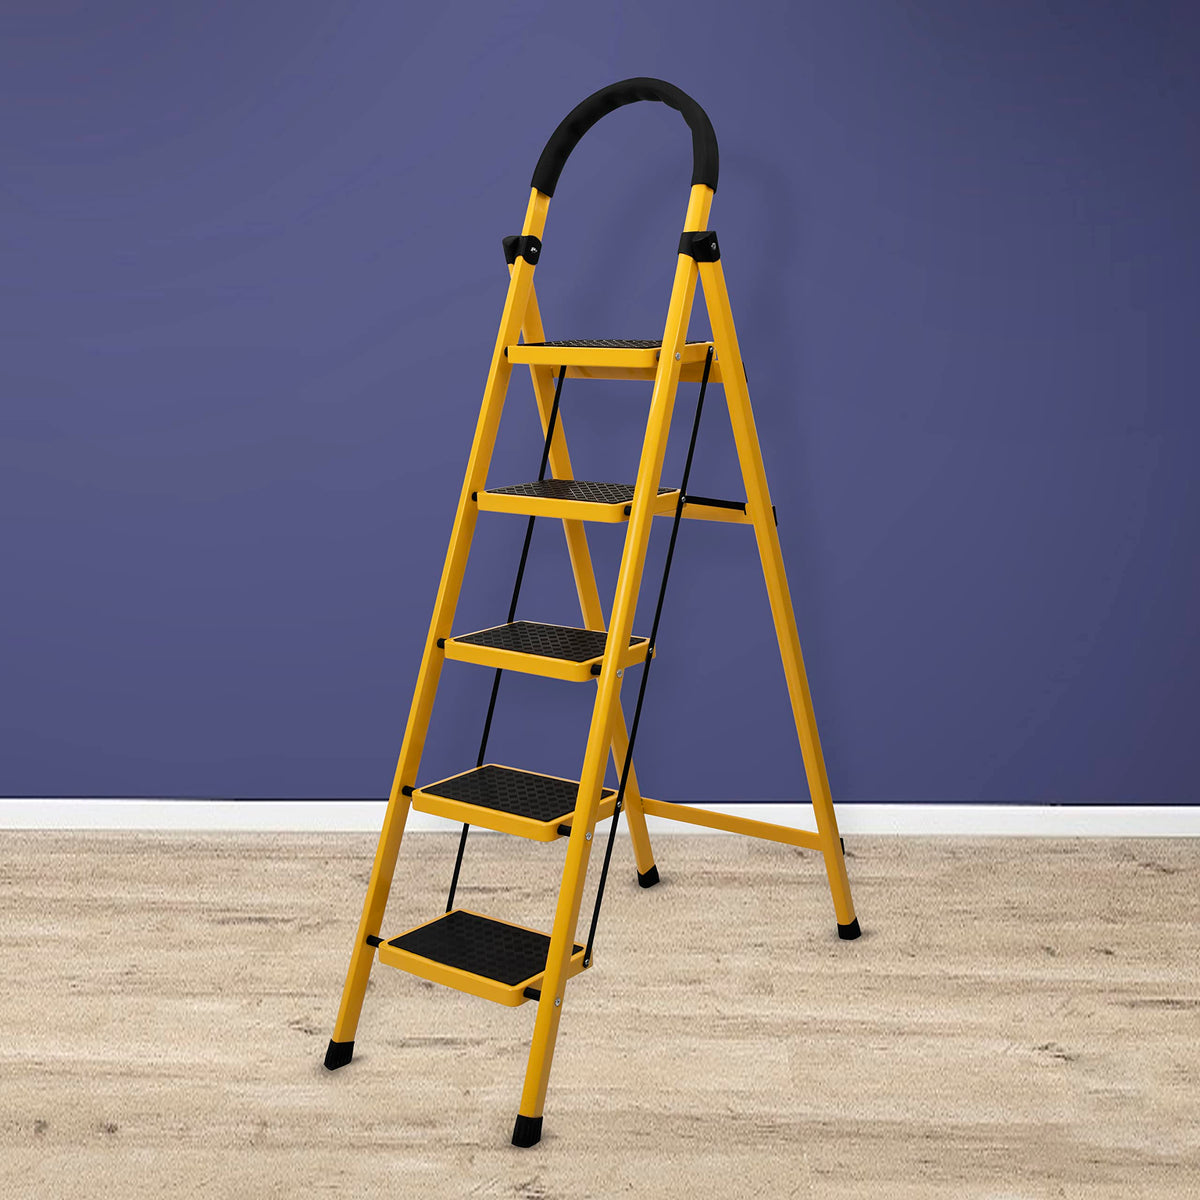 Plantex Premium GI Steel Foldable 6-Step Ladder for Home - Wide Anti Slip 6 Step Ladder (Honey Yellow & Black)